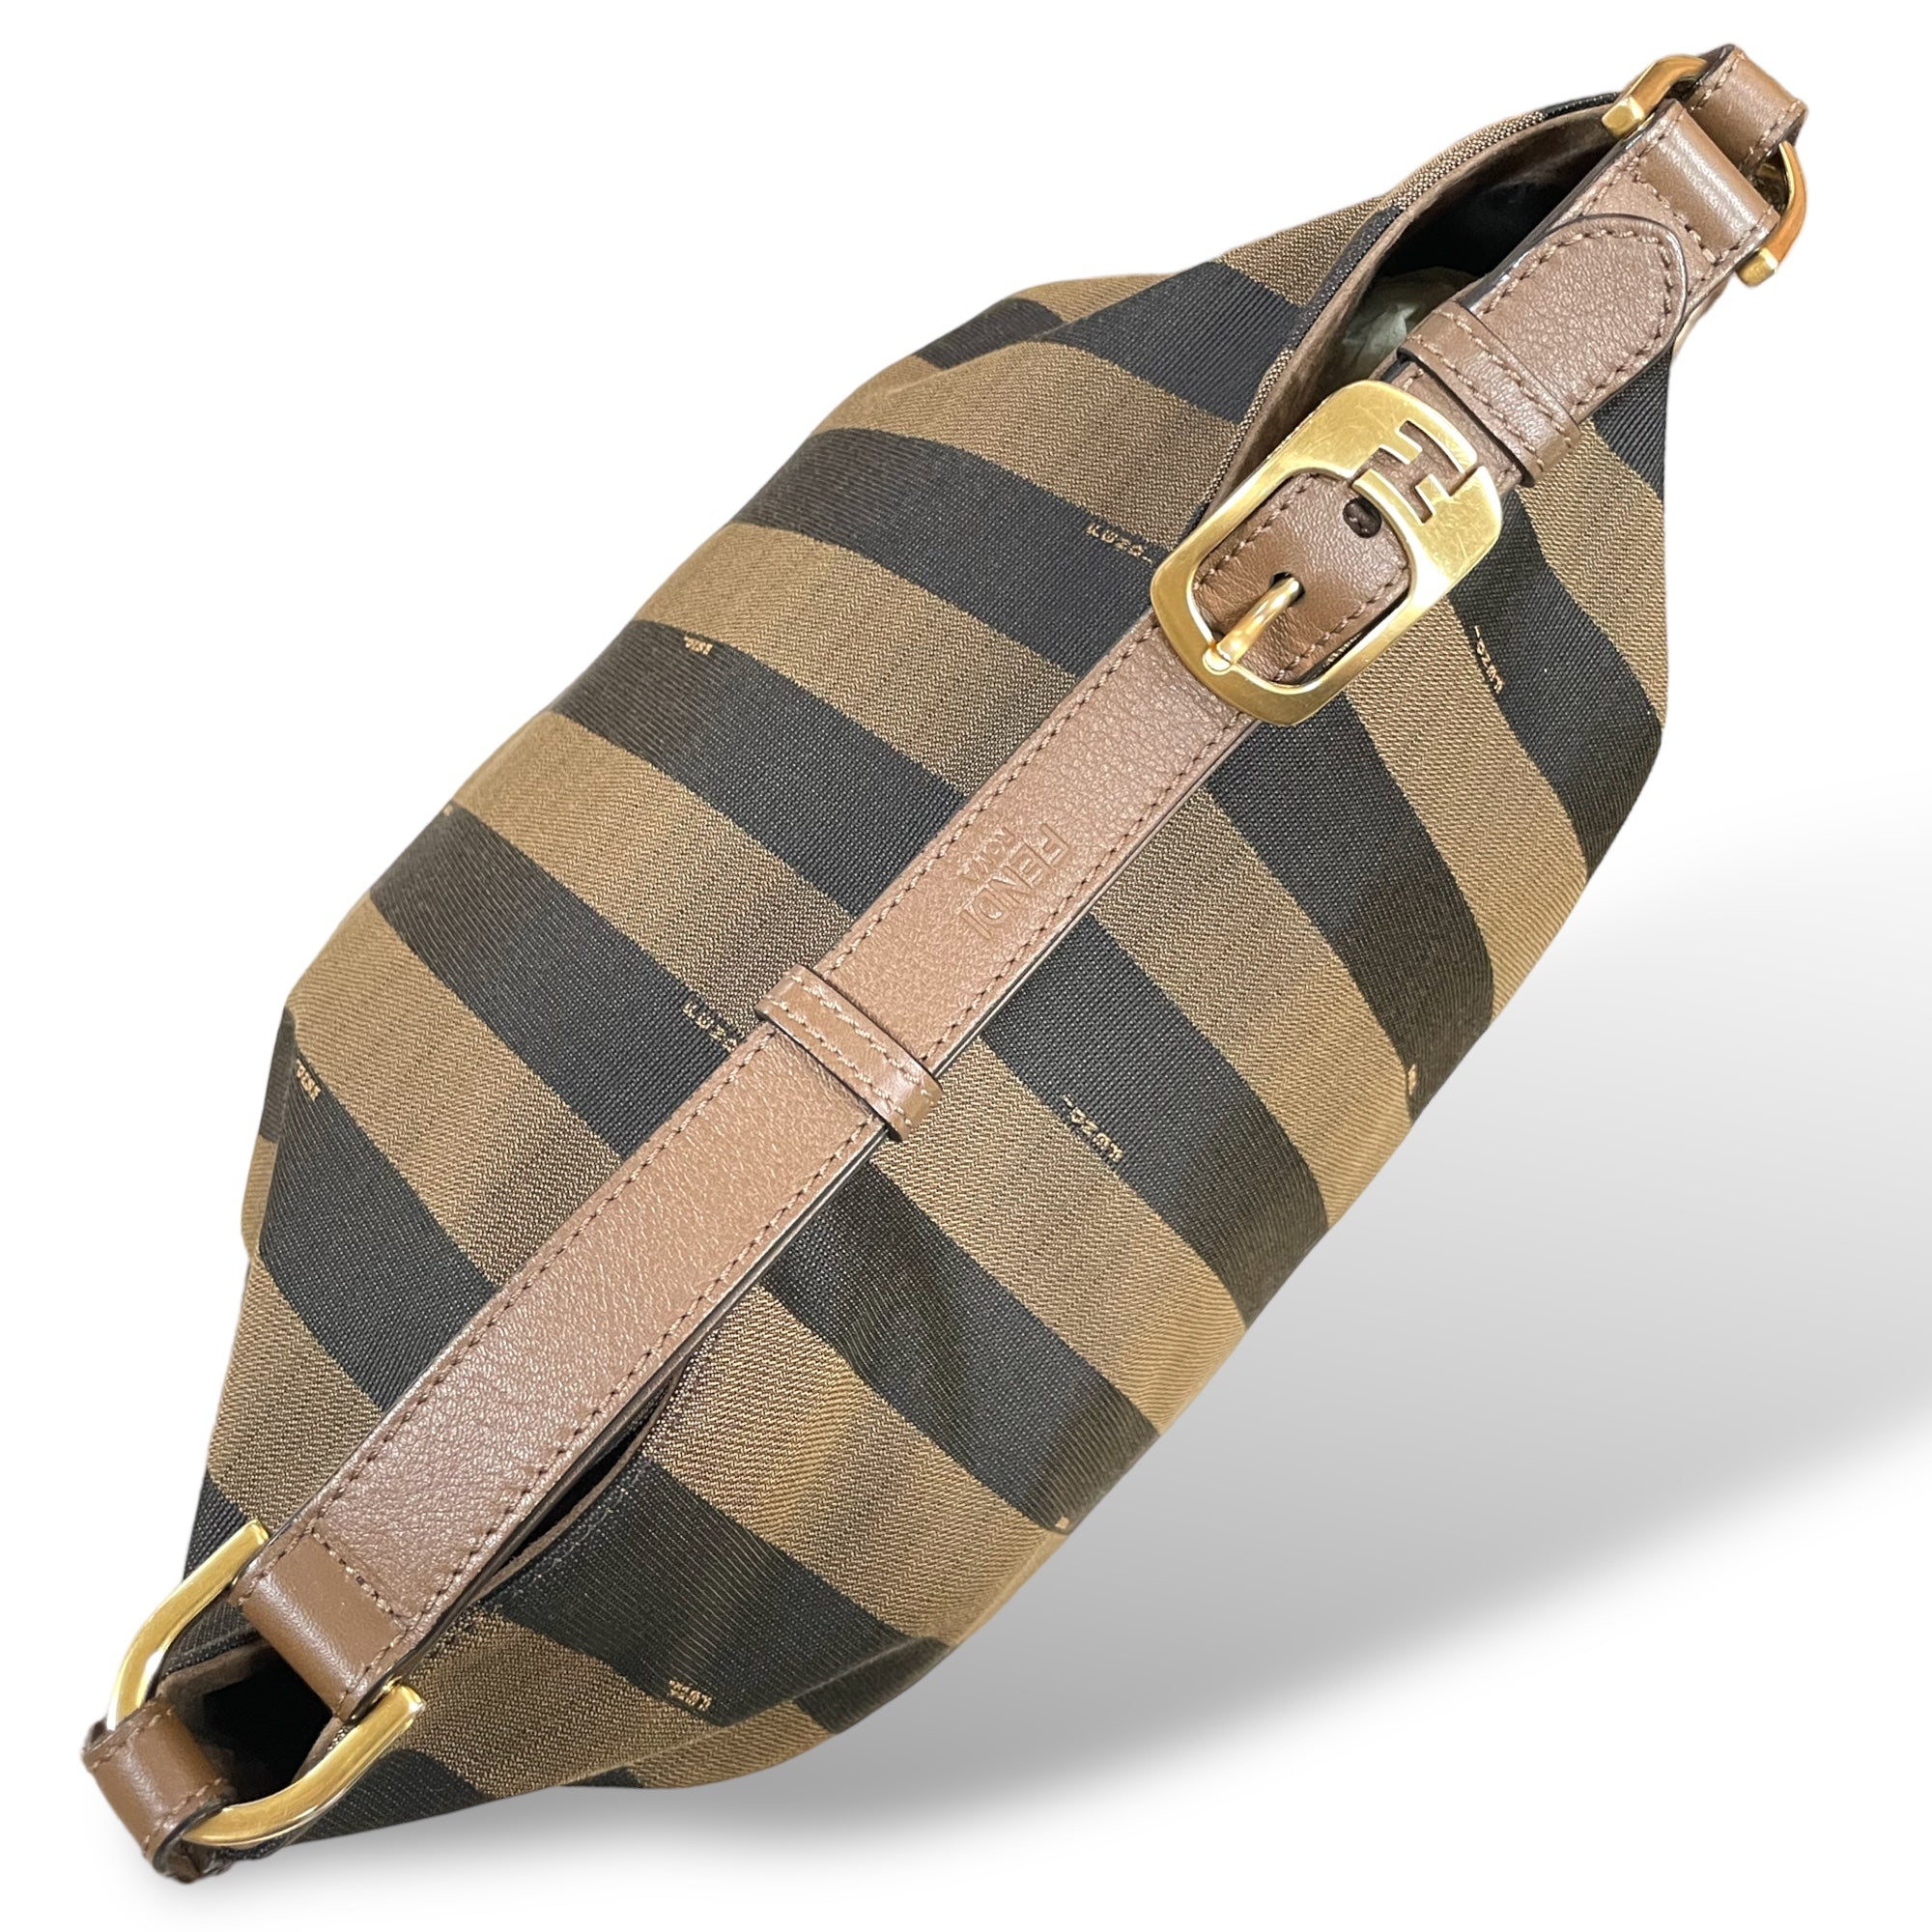 FENDI Large Pequin Striped Hobo Bag